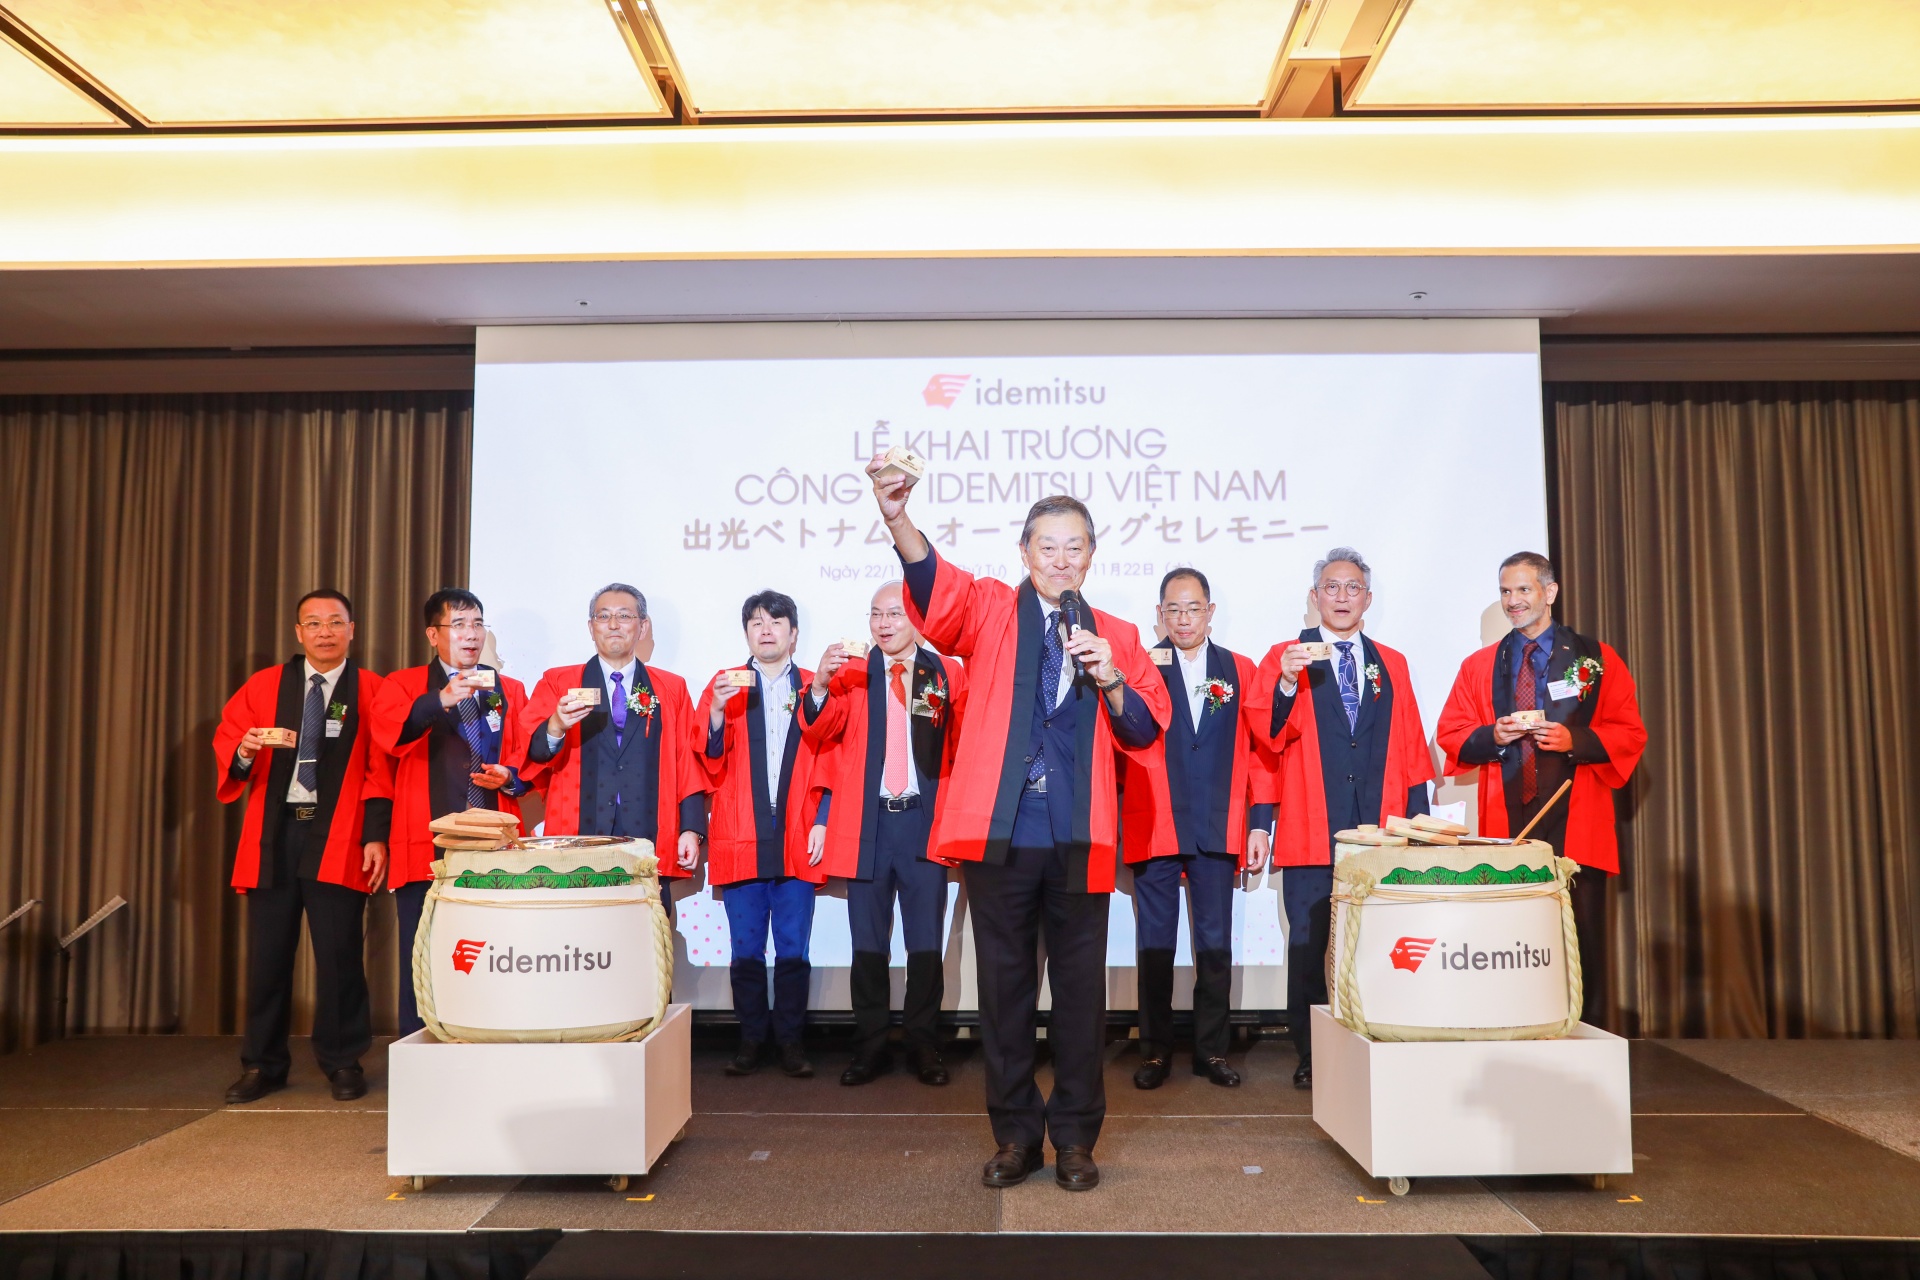 Idemitsu Vietnam established to consolidate its business activities